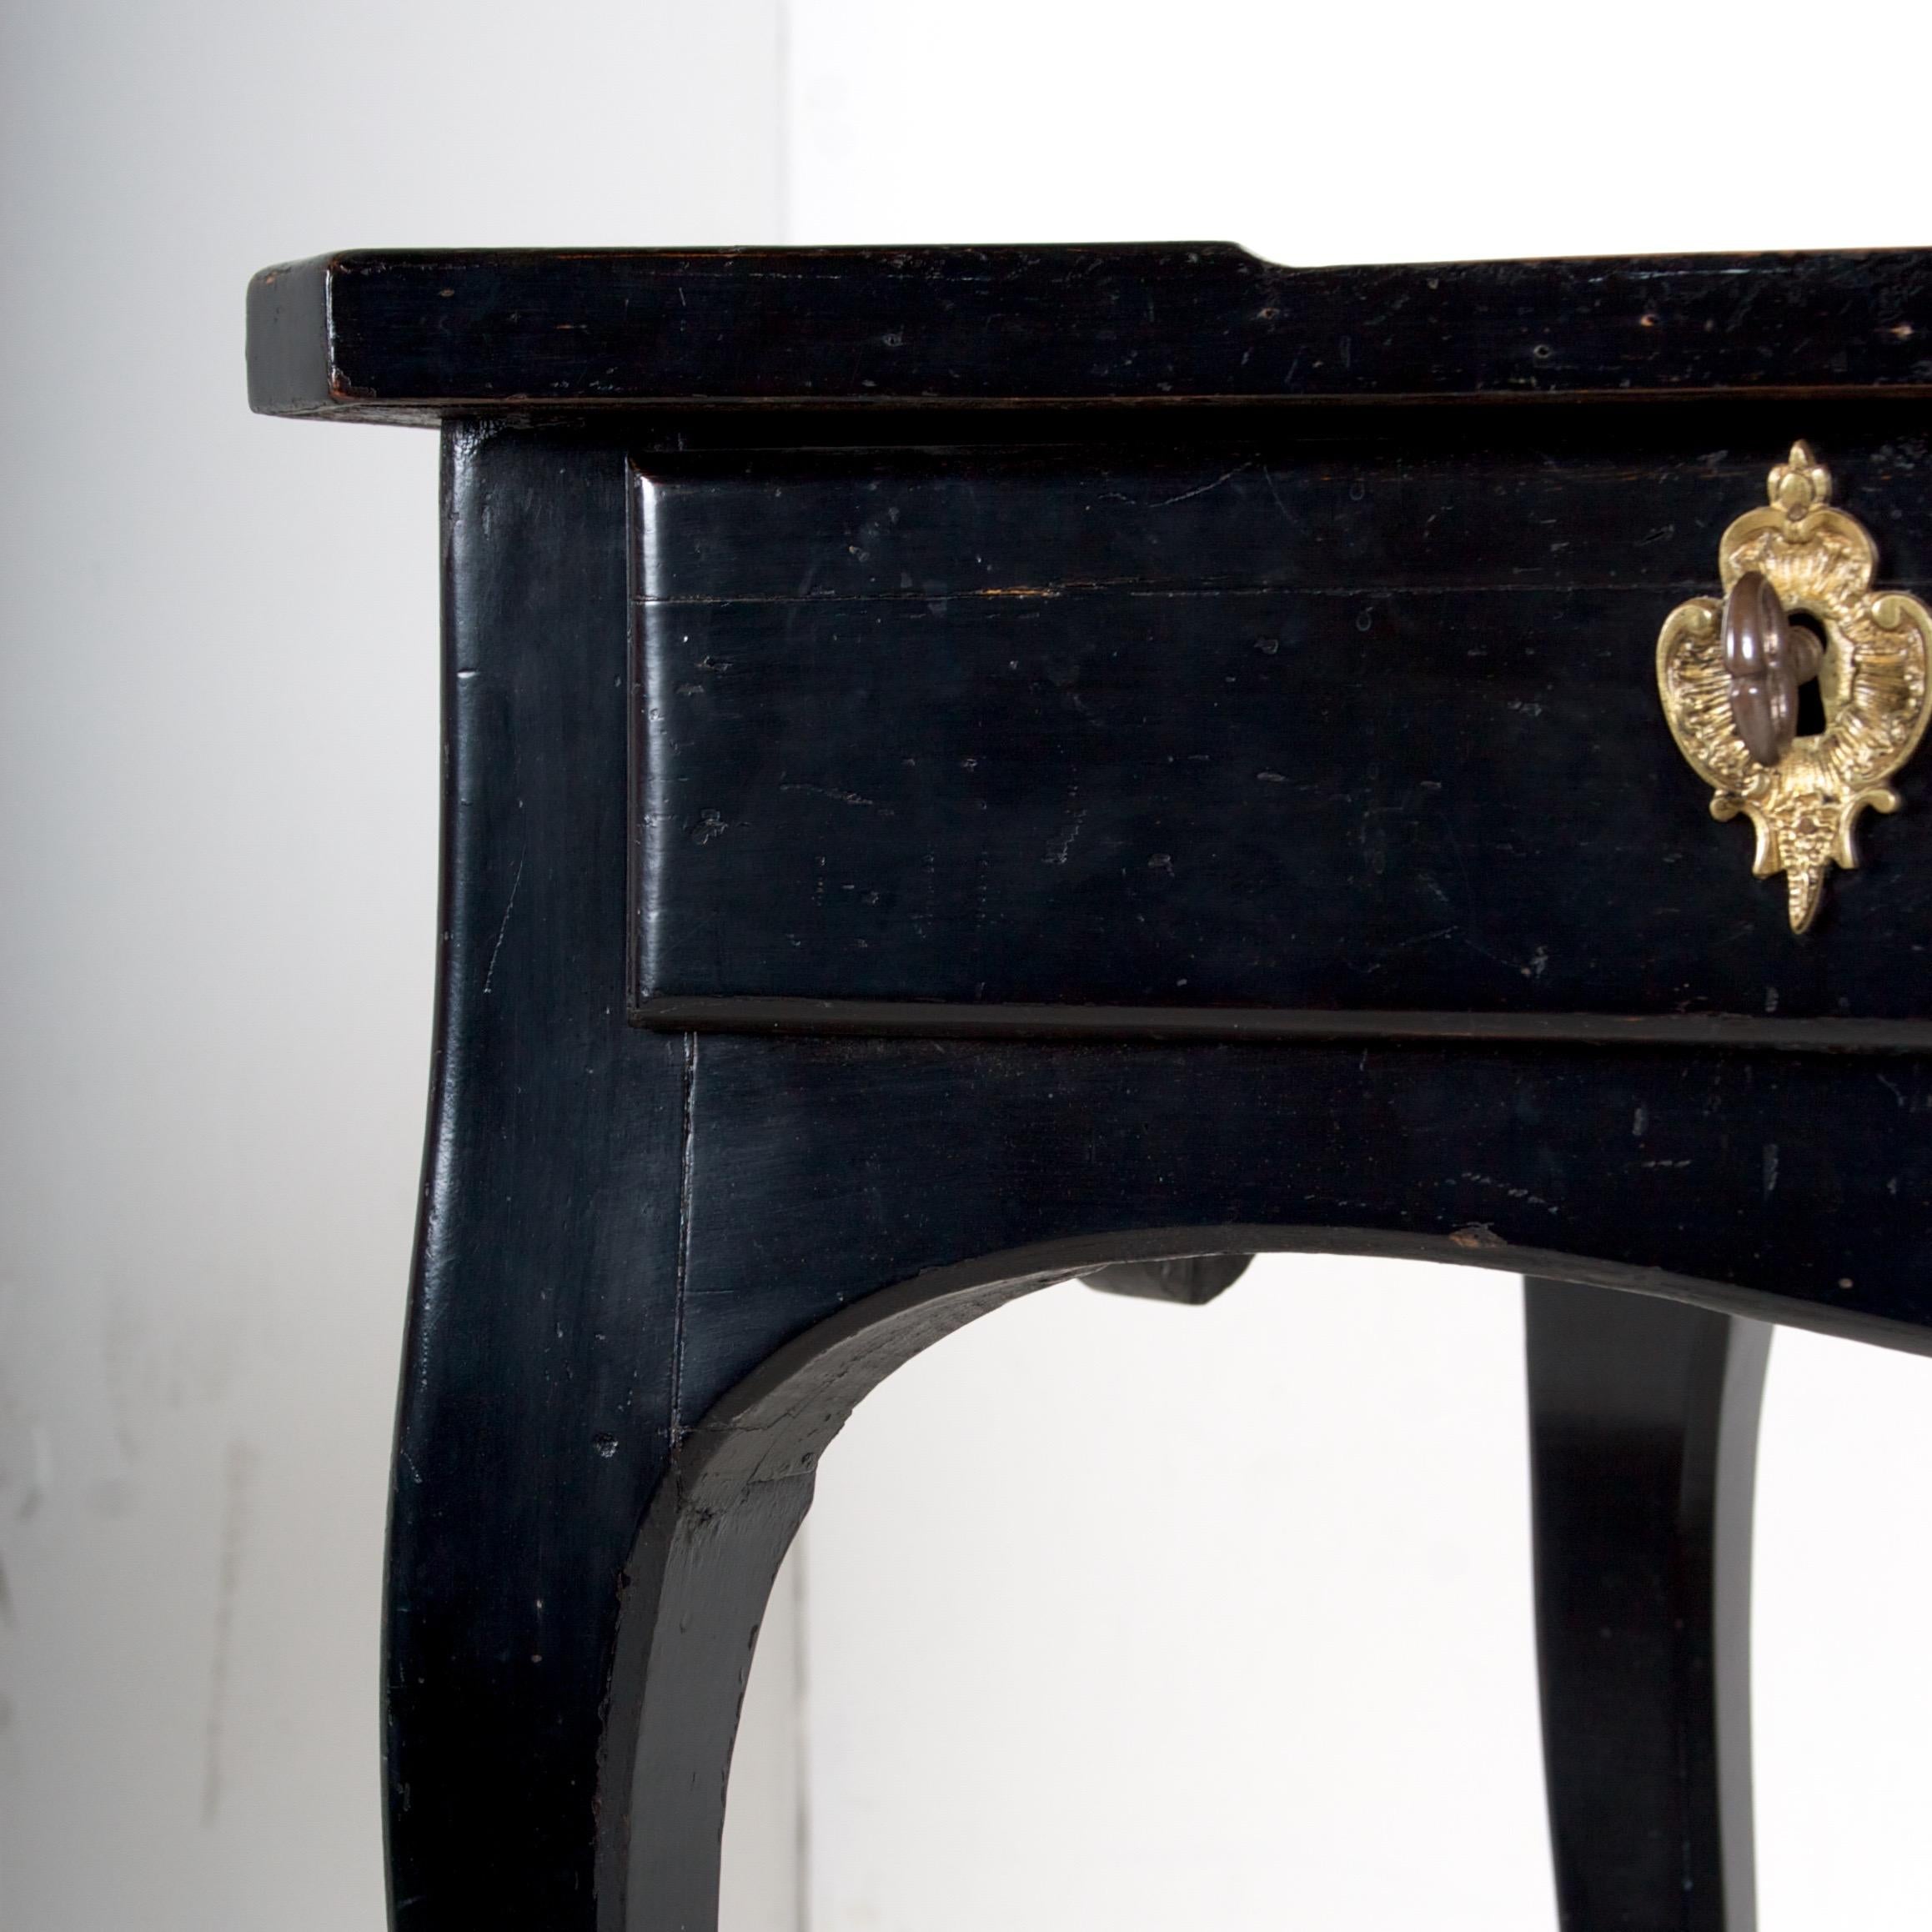 Leather Early 19th Century Desk/Bureau Plat D' Epoque Regence